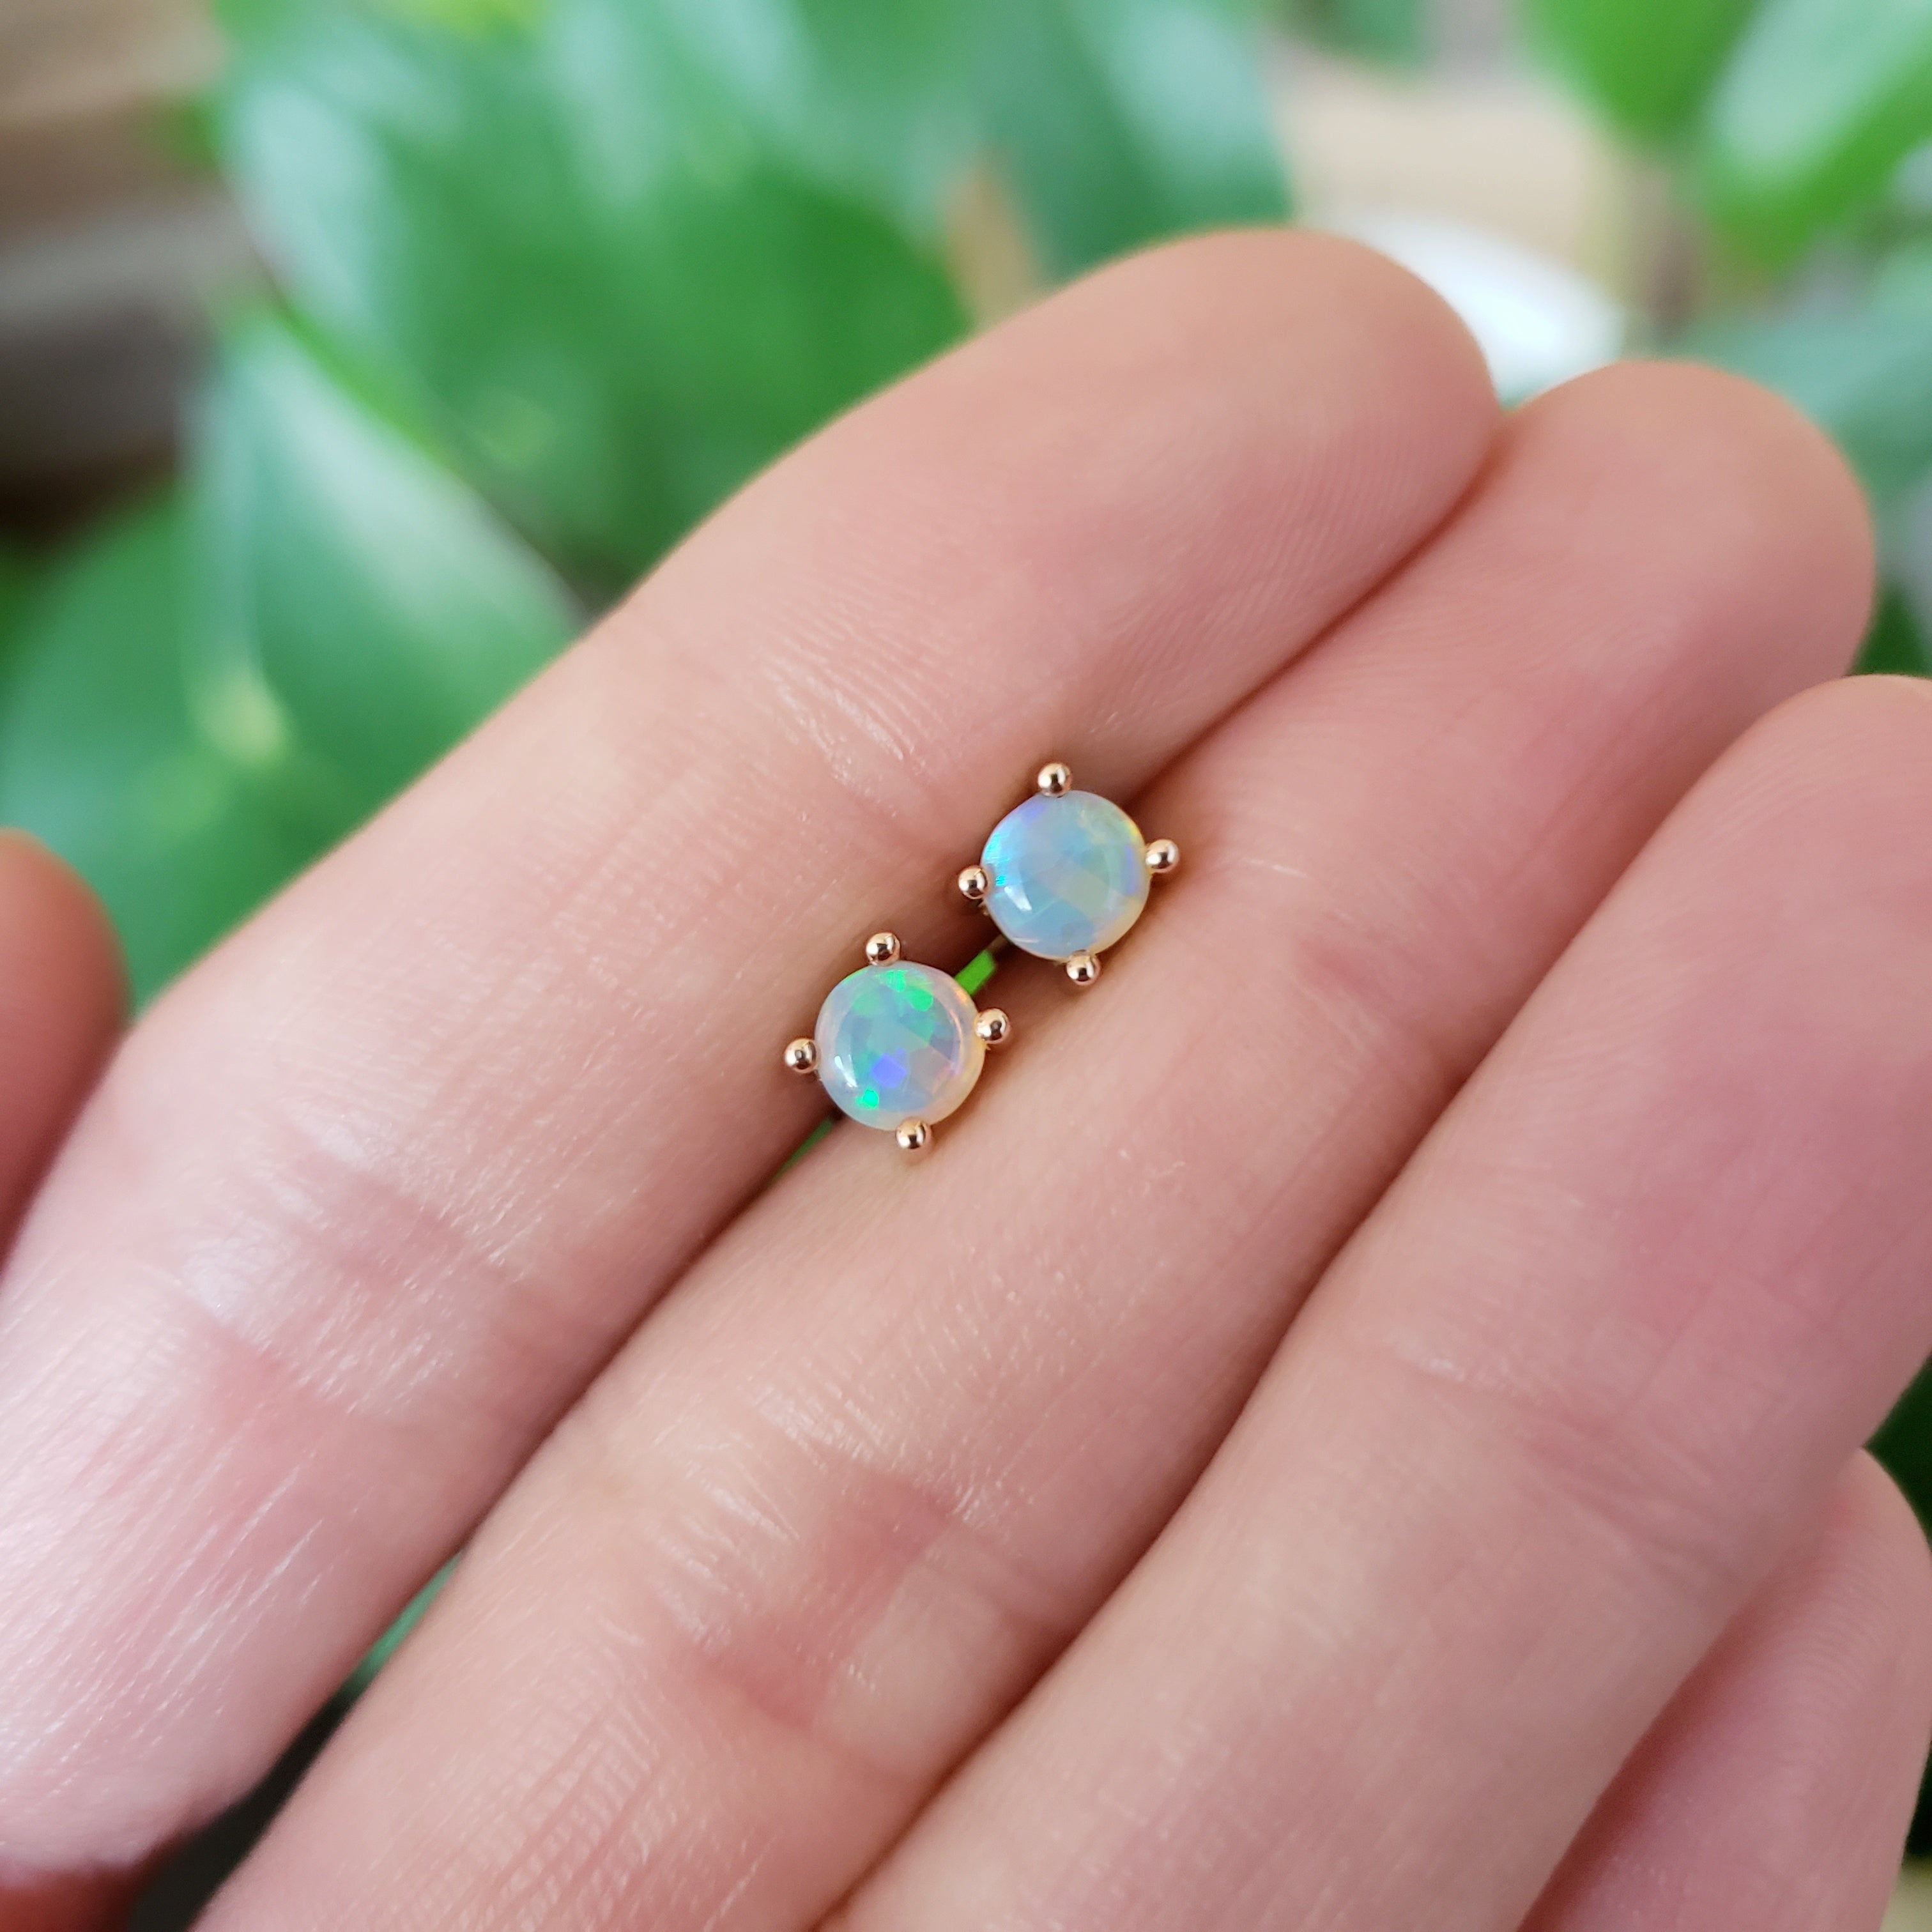 Opal Stud Earrings | Era Design Vancouver Canada